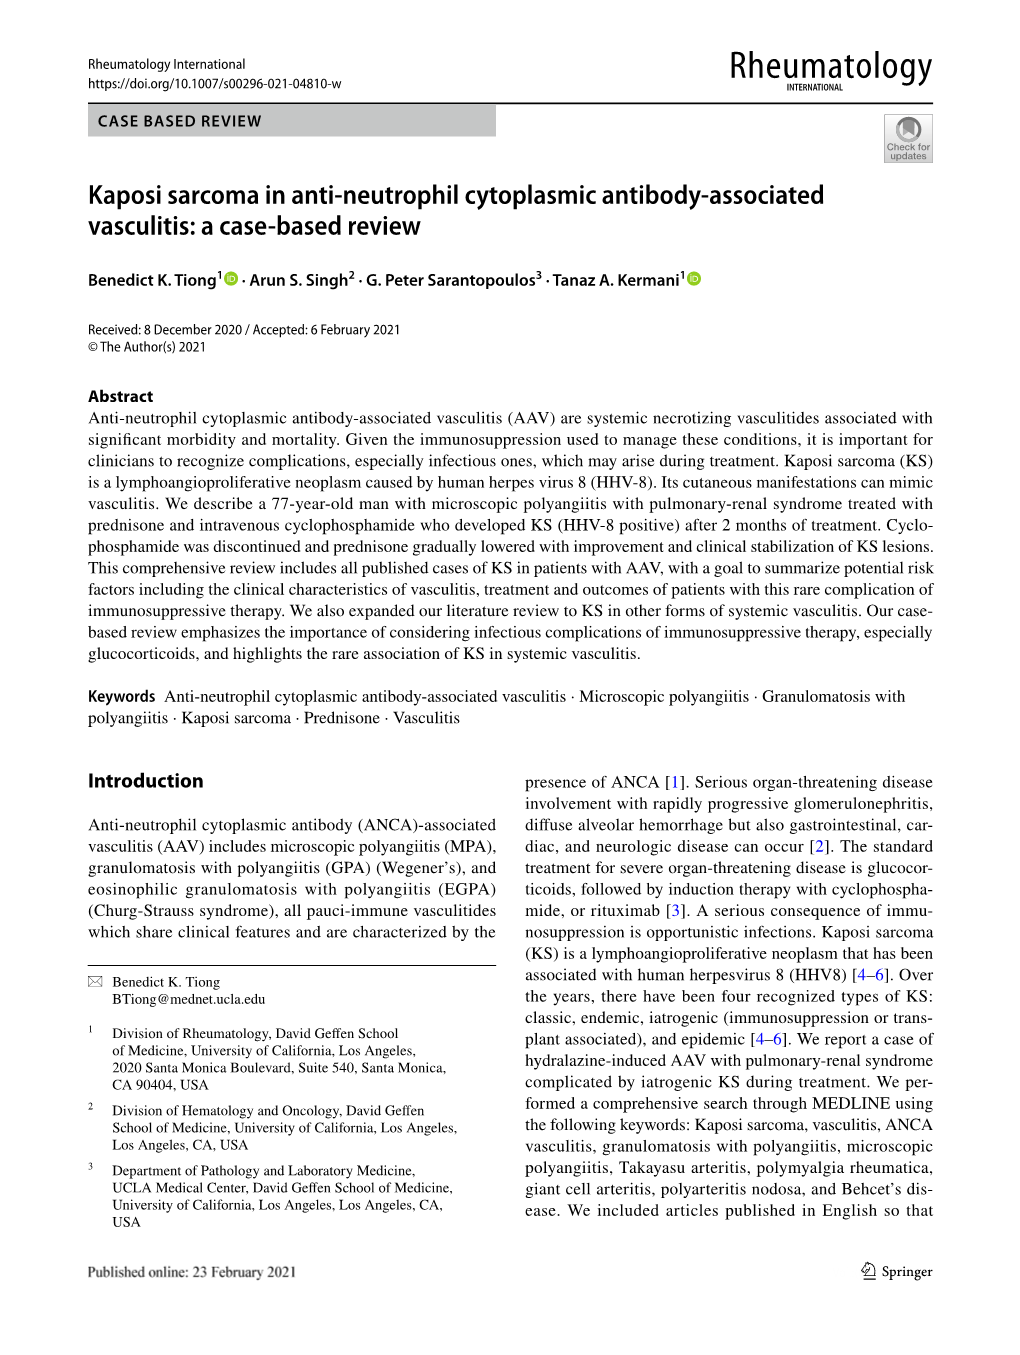 Kaposi Sarcoma in Anti-Neutrophil Cytoplasmic Antibody-Associated